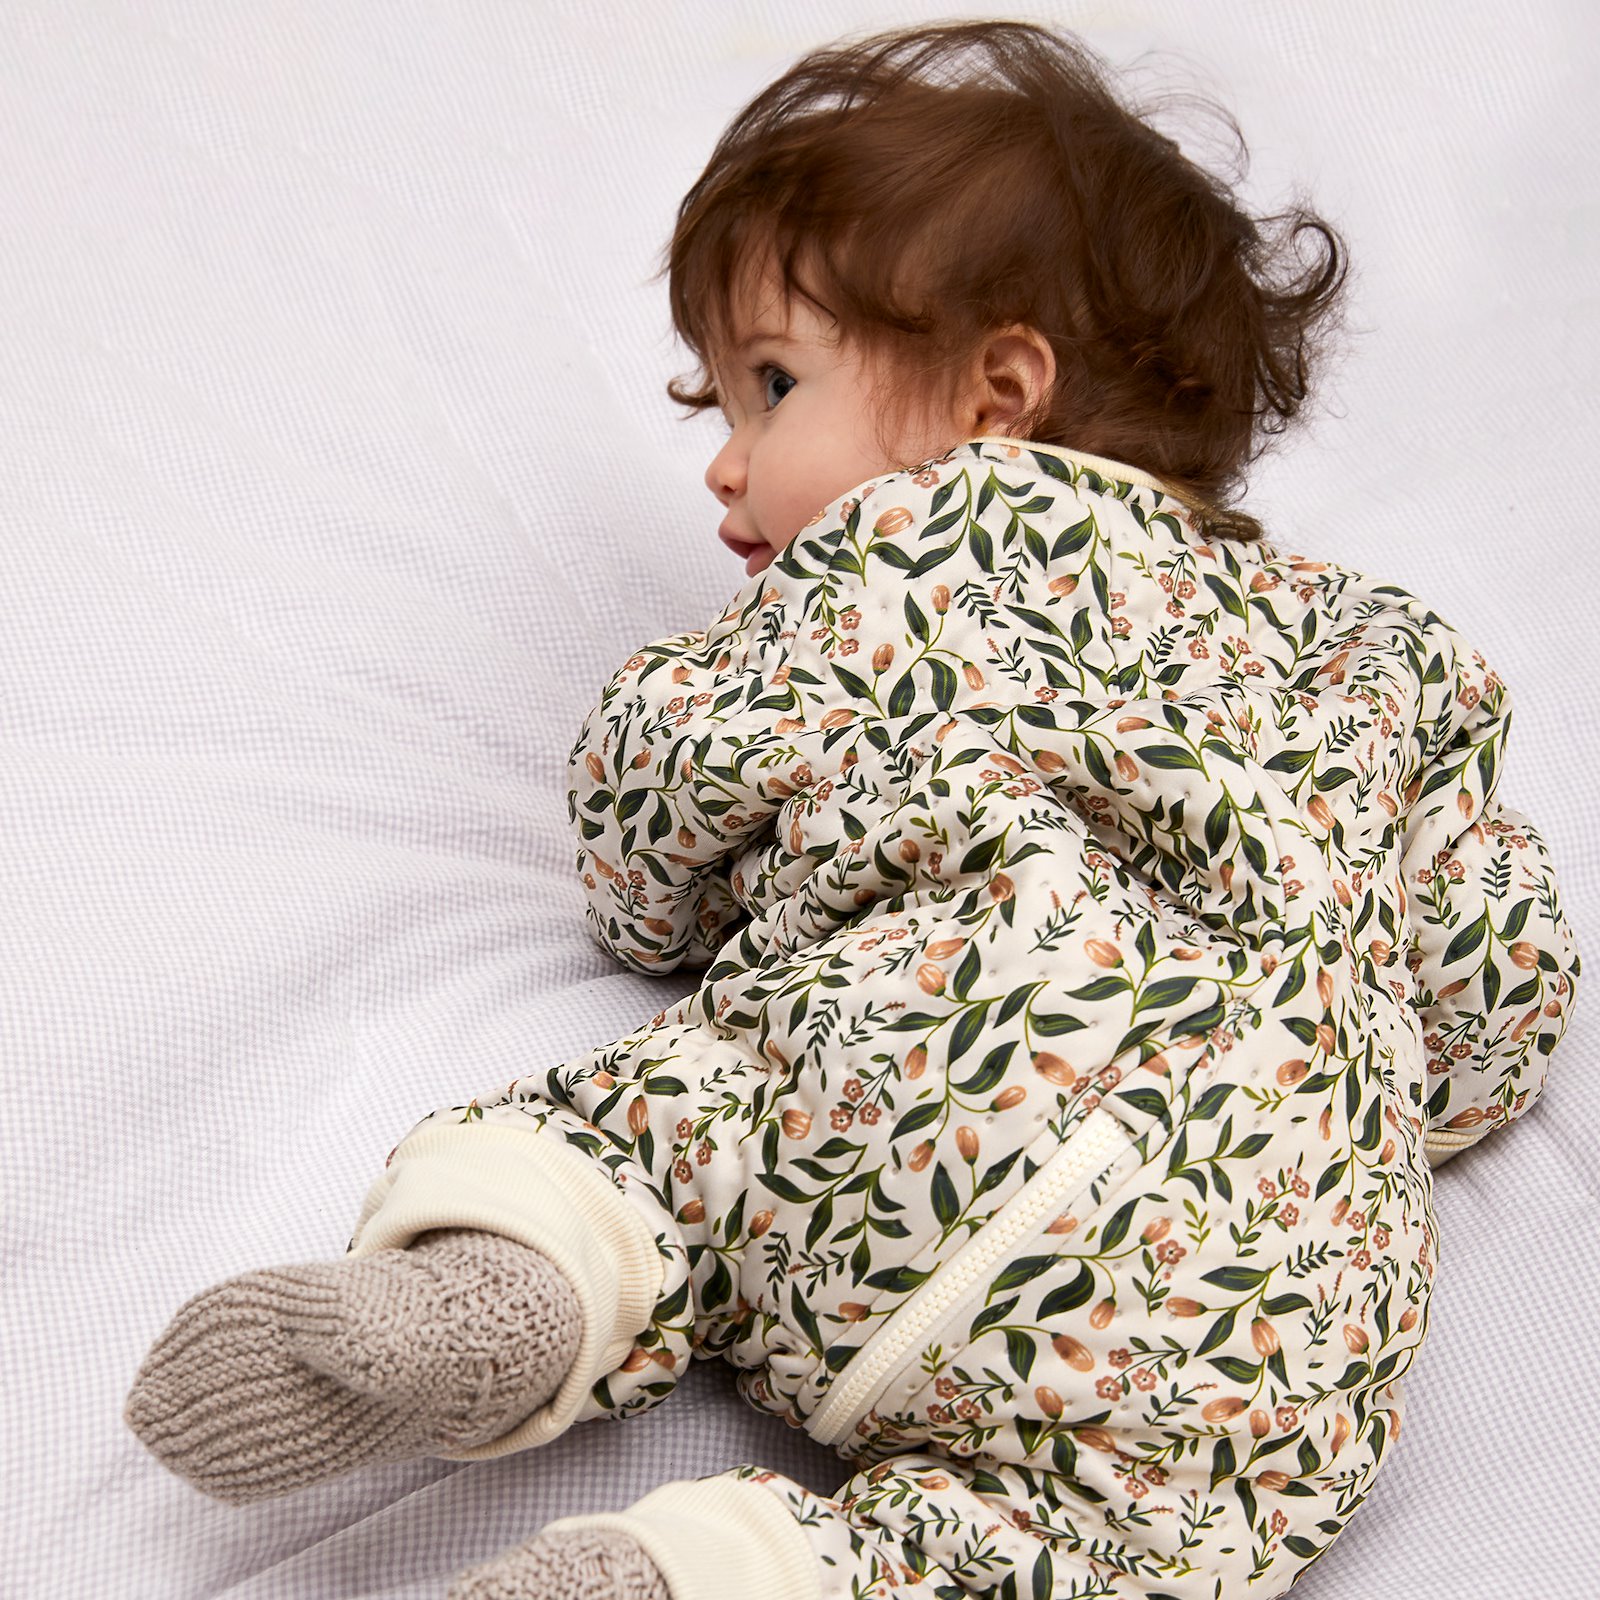 FRAYA knitting pattern – Baby quintessentials - Delicate p81030_920405_272414_510917_FRAYA6060_bundle